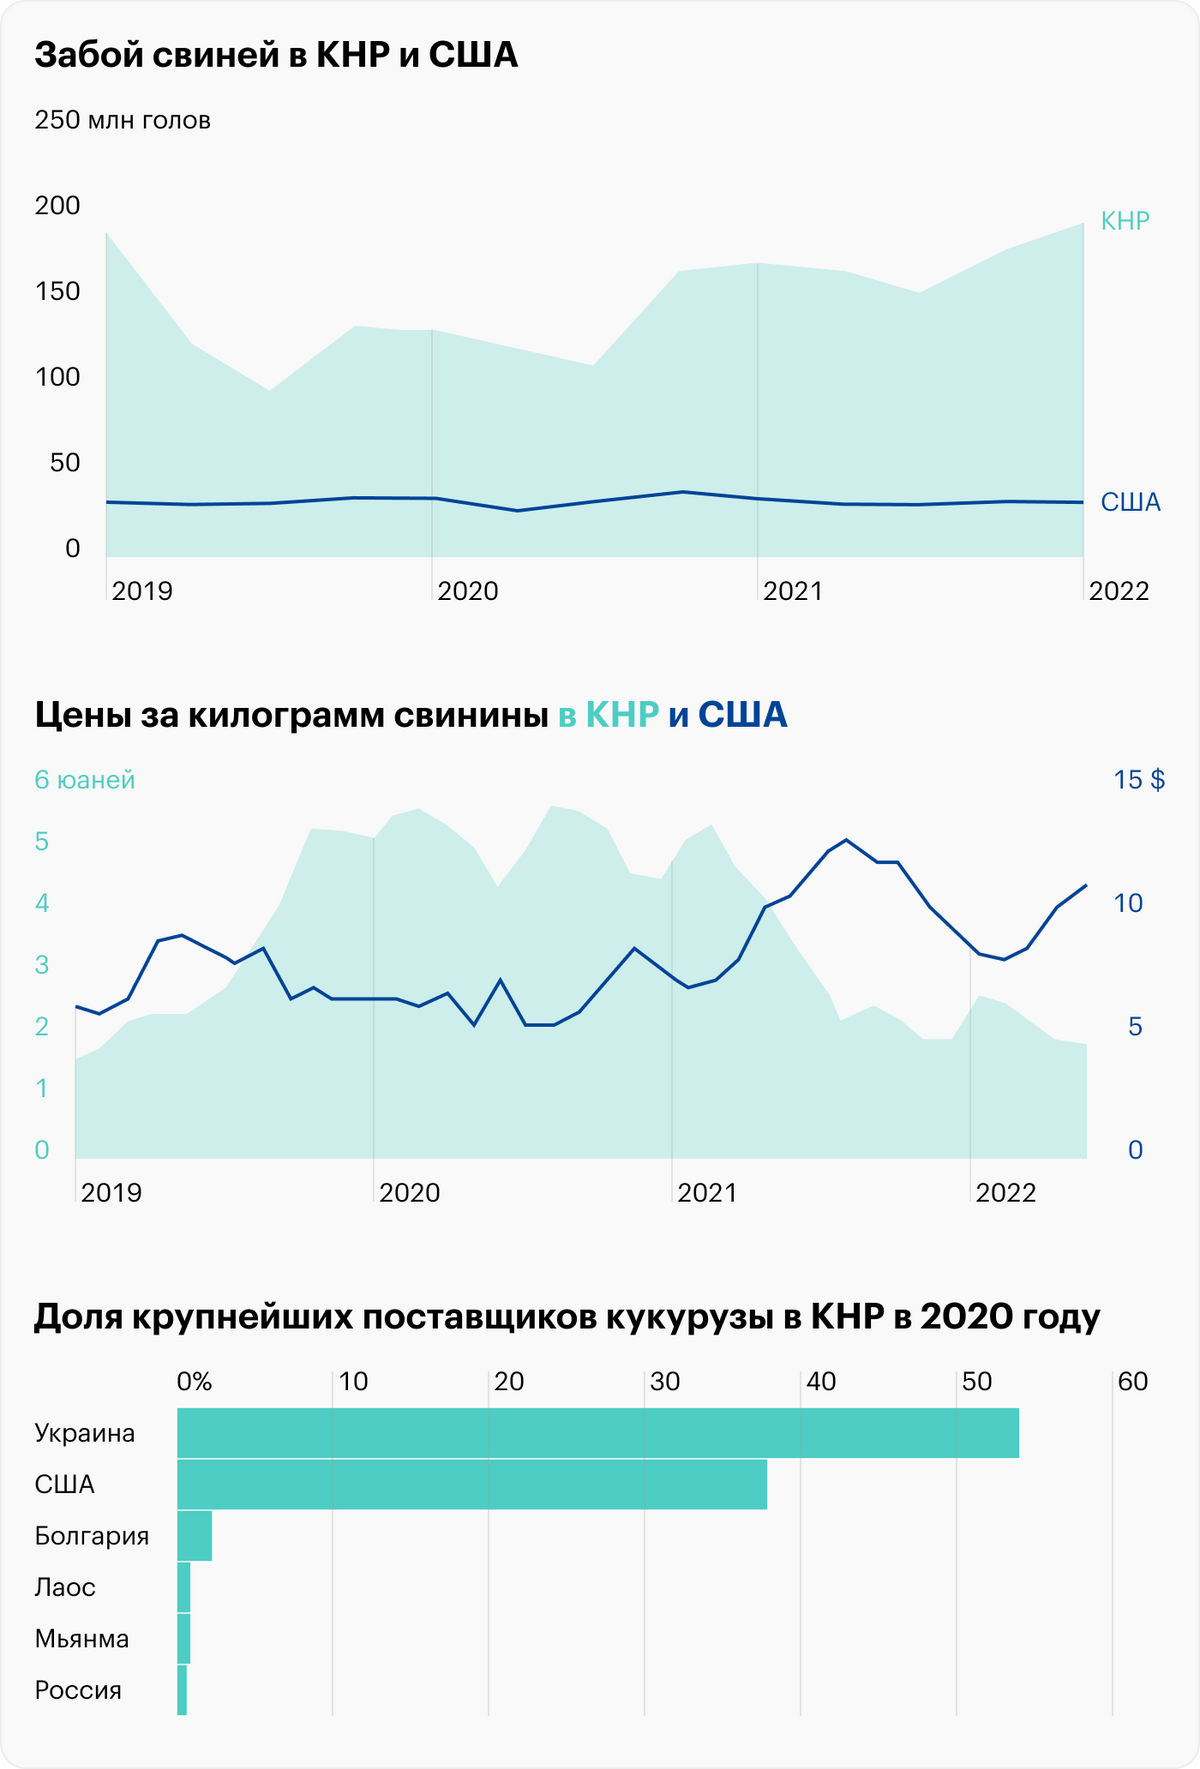 Источник: презентация WH Group, слайд&nbsp;5&nbsp;(6), Daily Shot, Ukraine accounts for&nbsp;a large share of corn imports